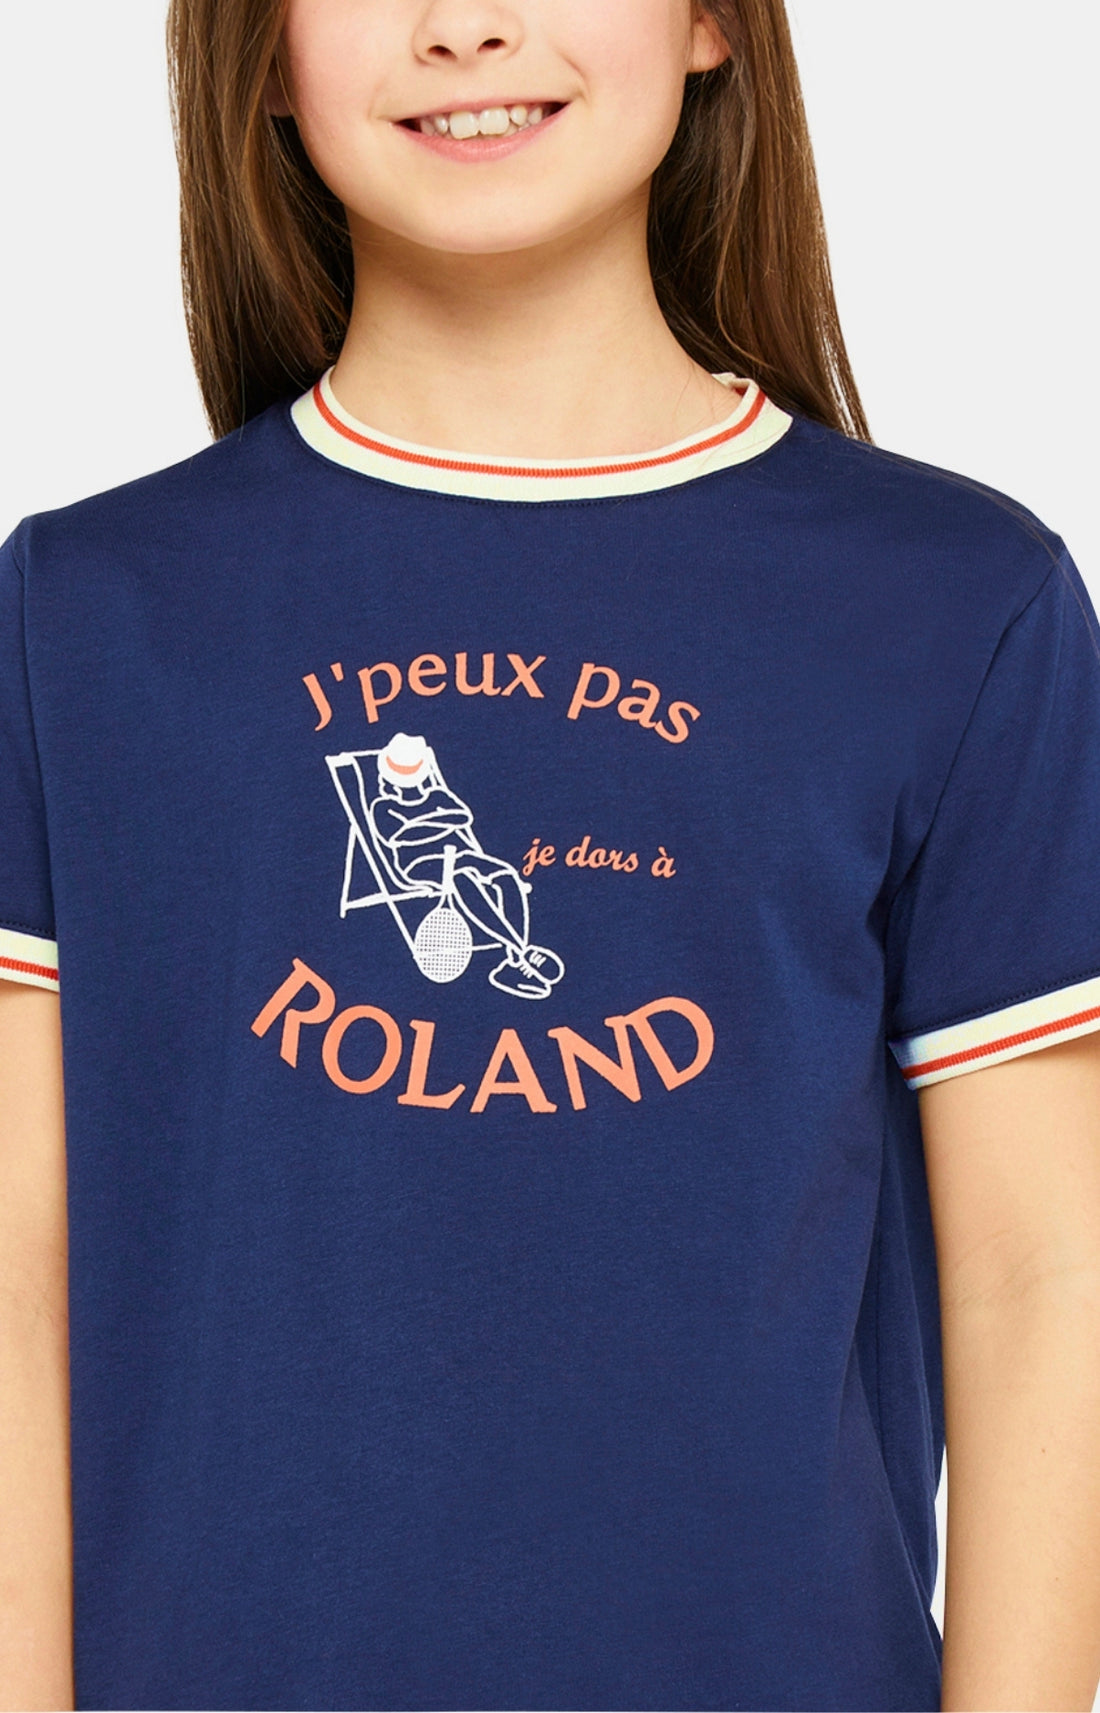 Pyjama short - Roland Garros